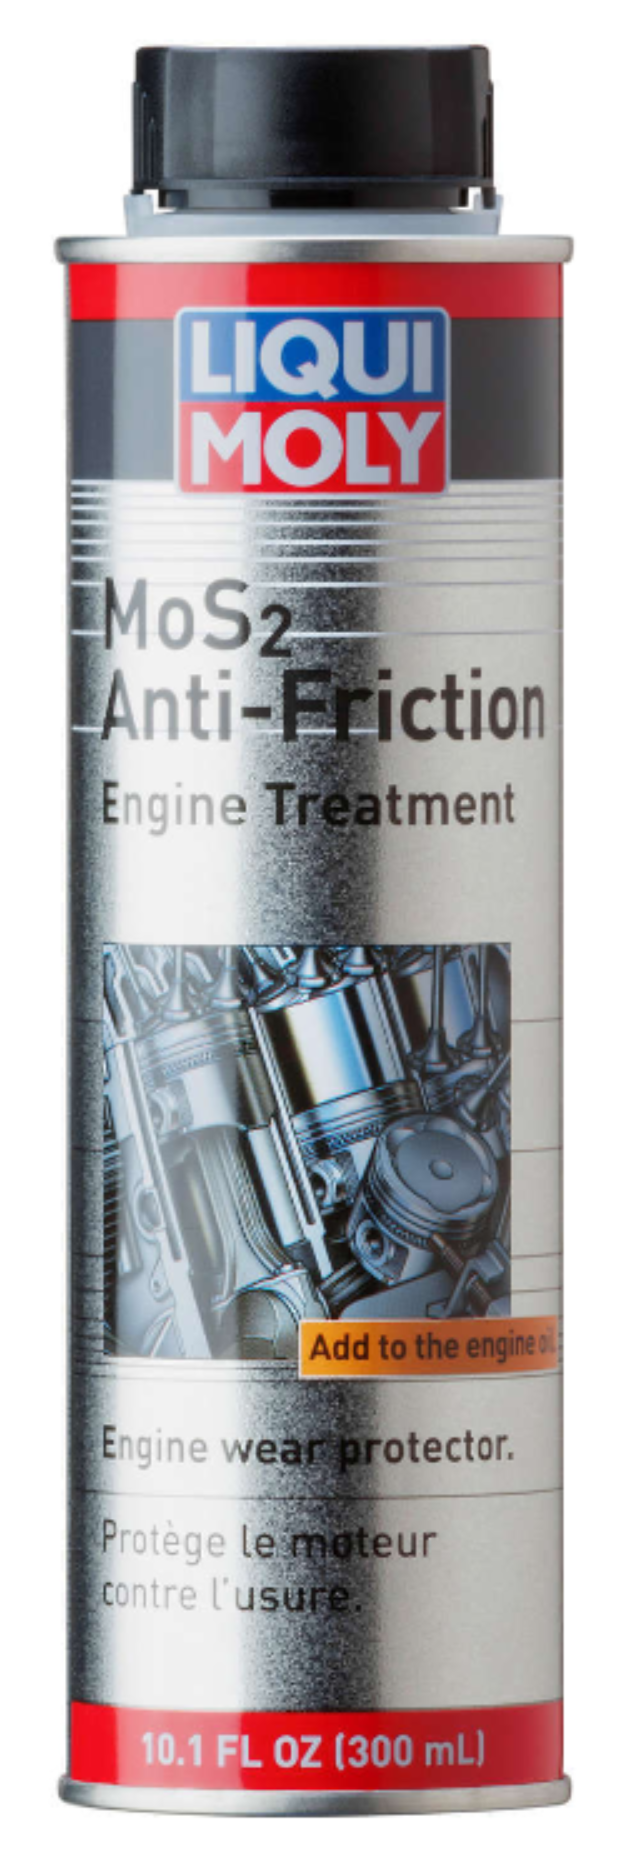 MoS2 Anti-Friction Engine Treatment (300ml Can) - Liqui Moly LM2009